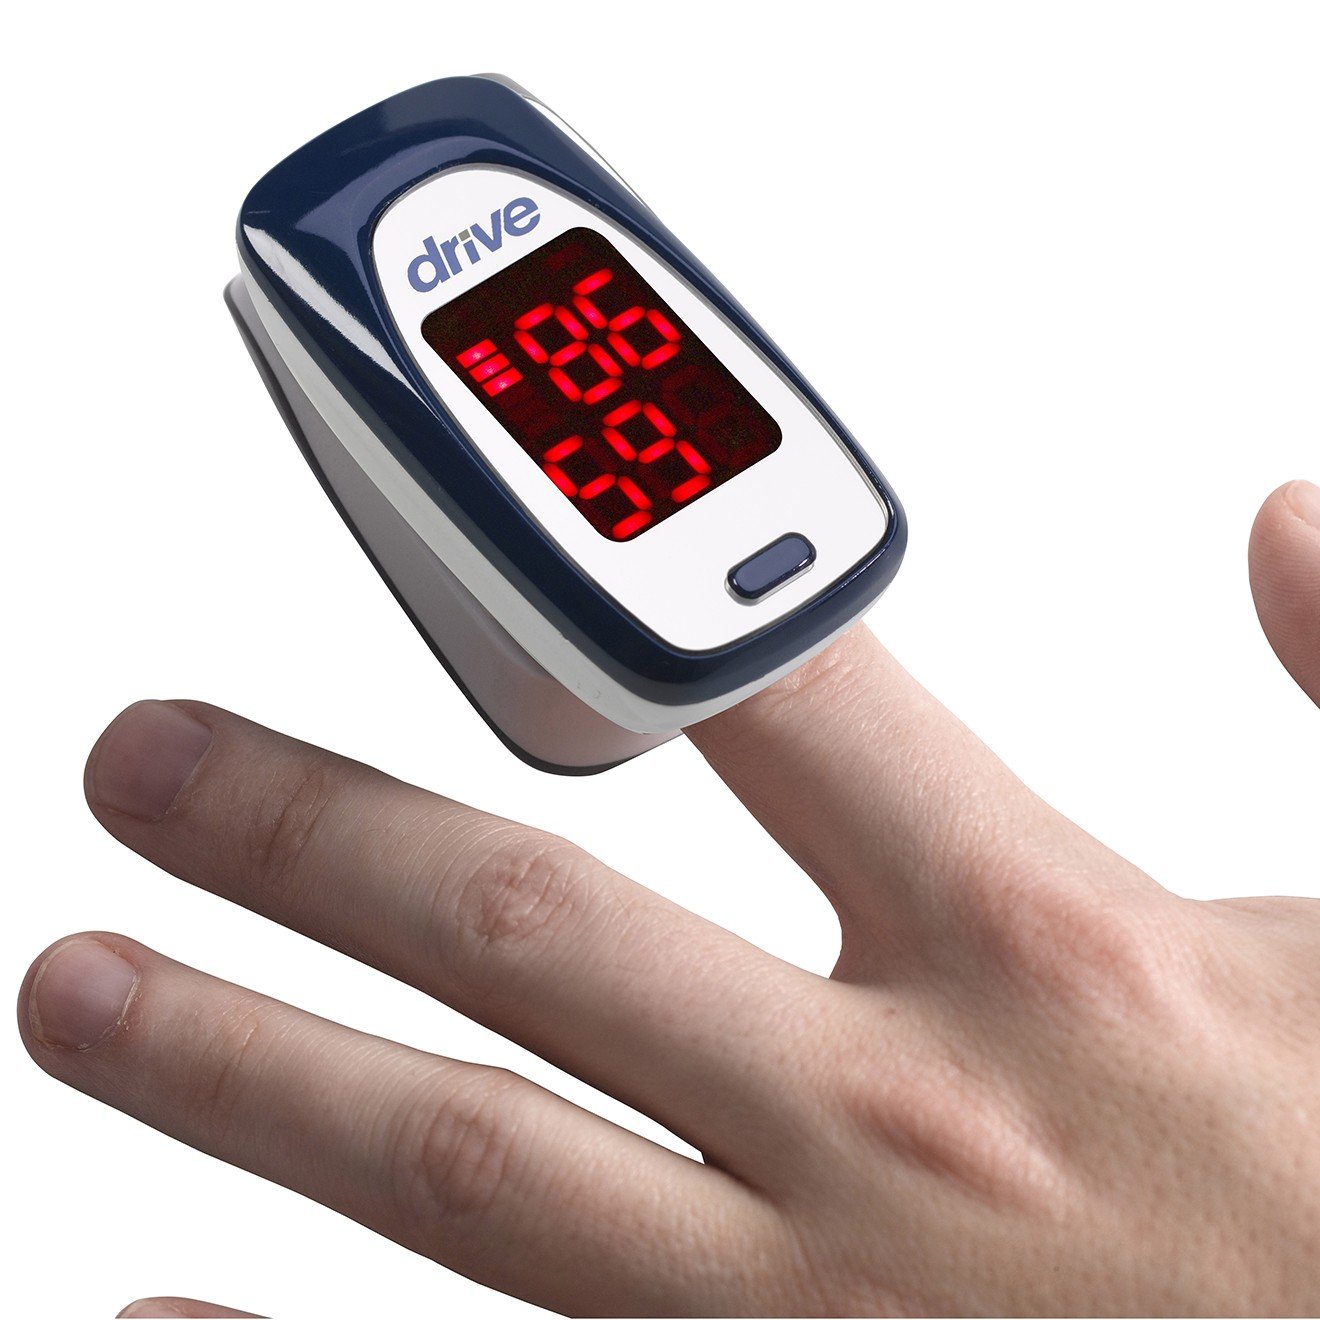 Drive Fingertip Pulse Oximeter